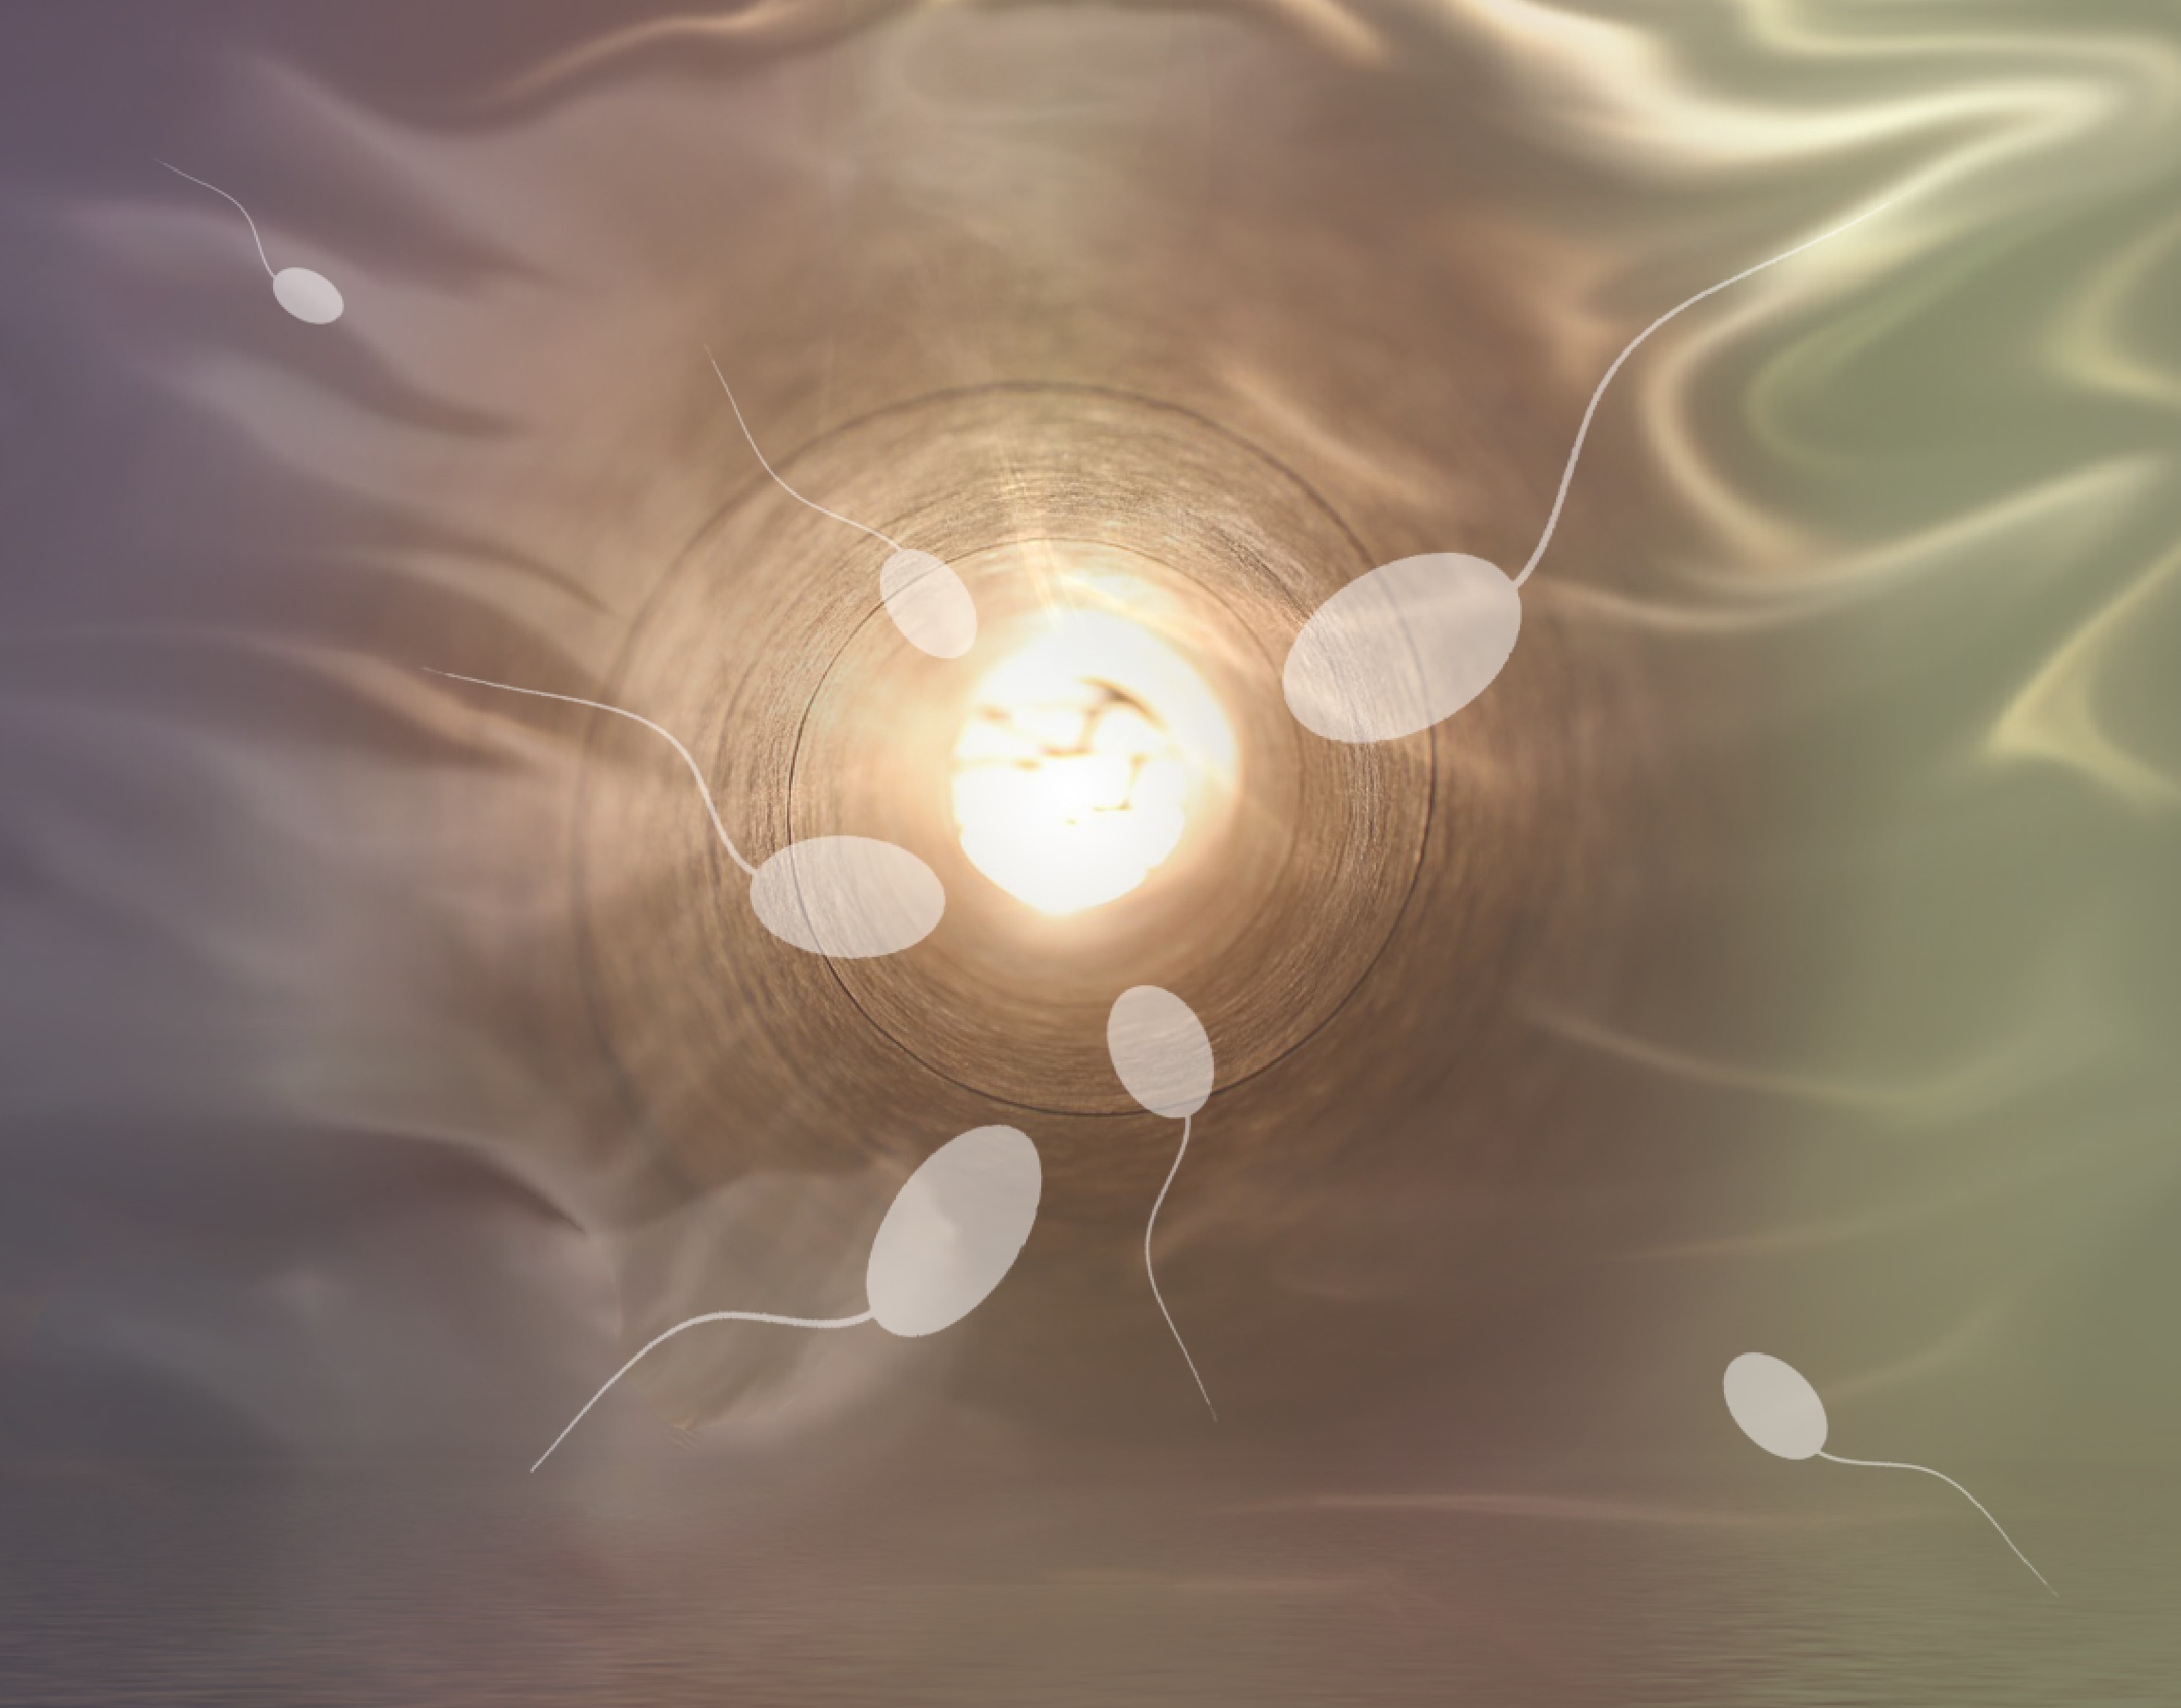 sperm image by Karin Henseler from Pixabay